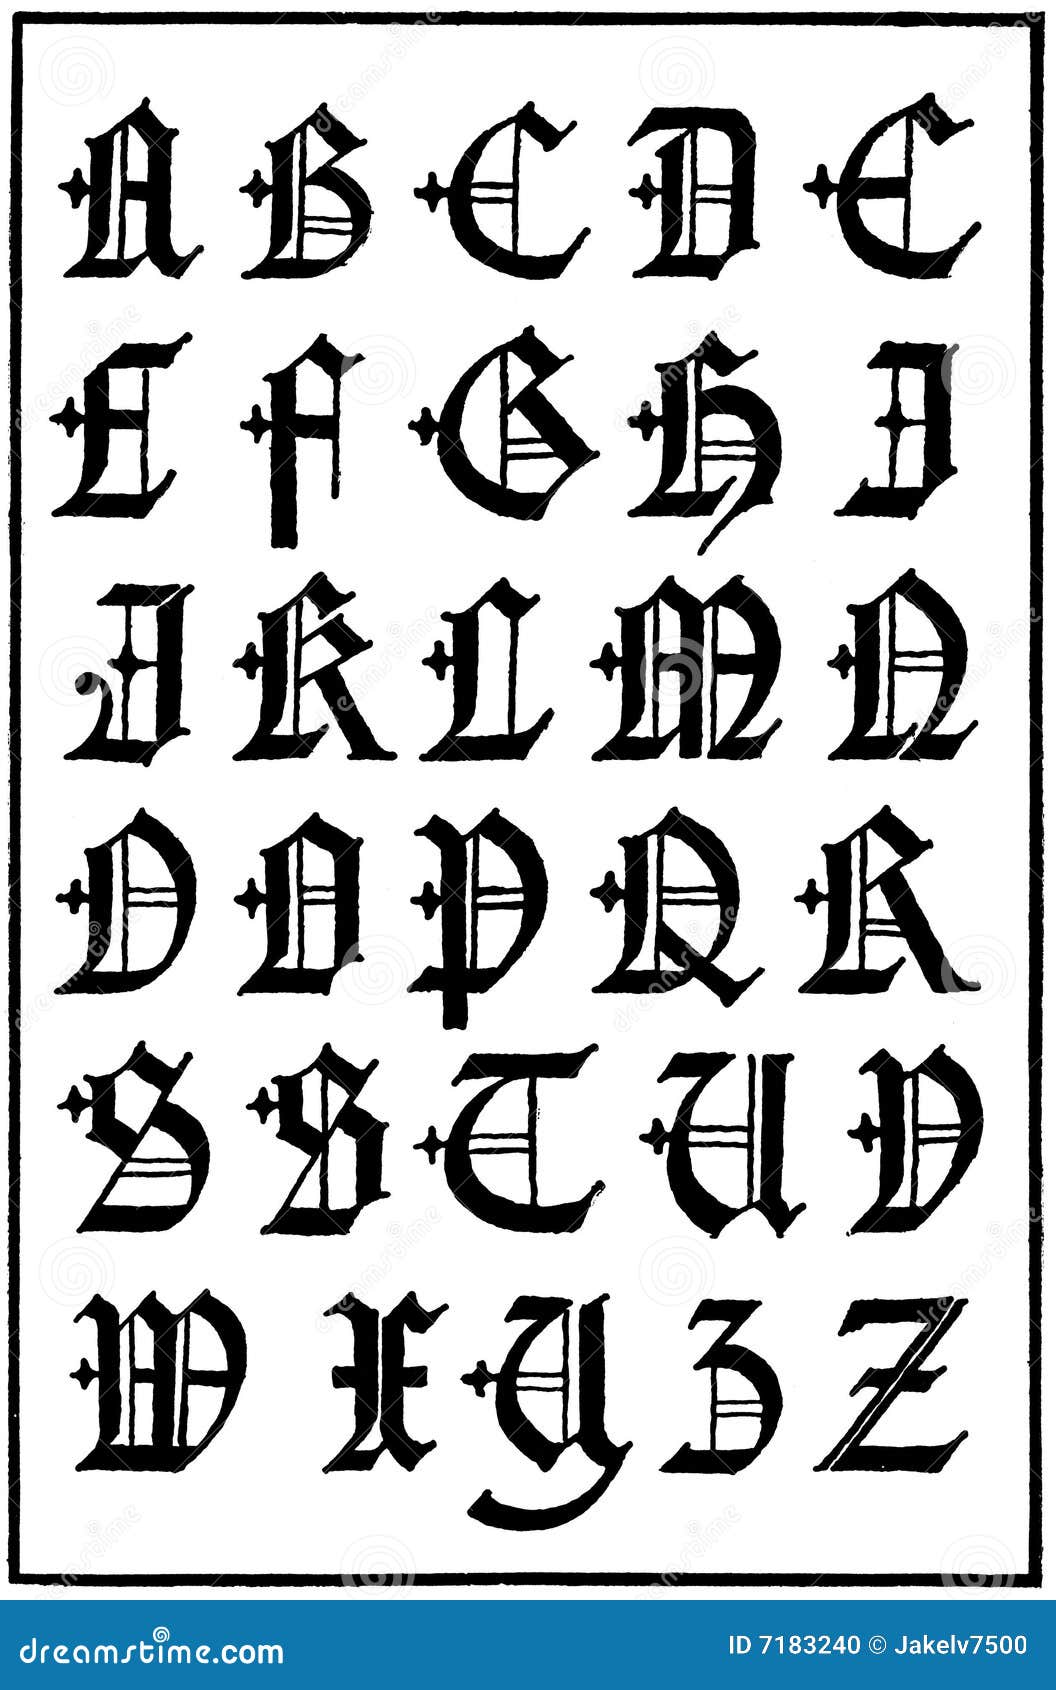 english gothic capitals, 16th century